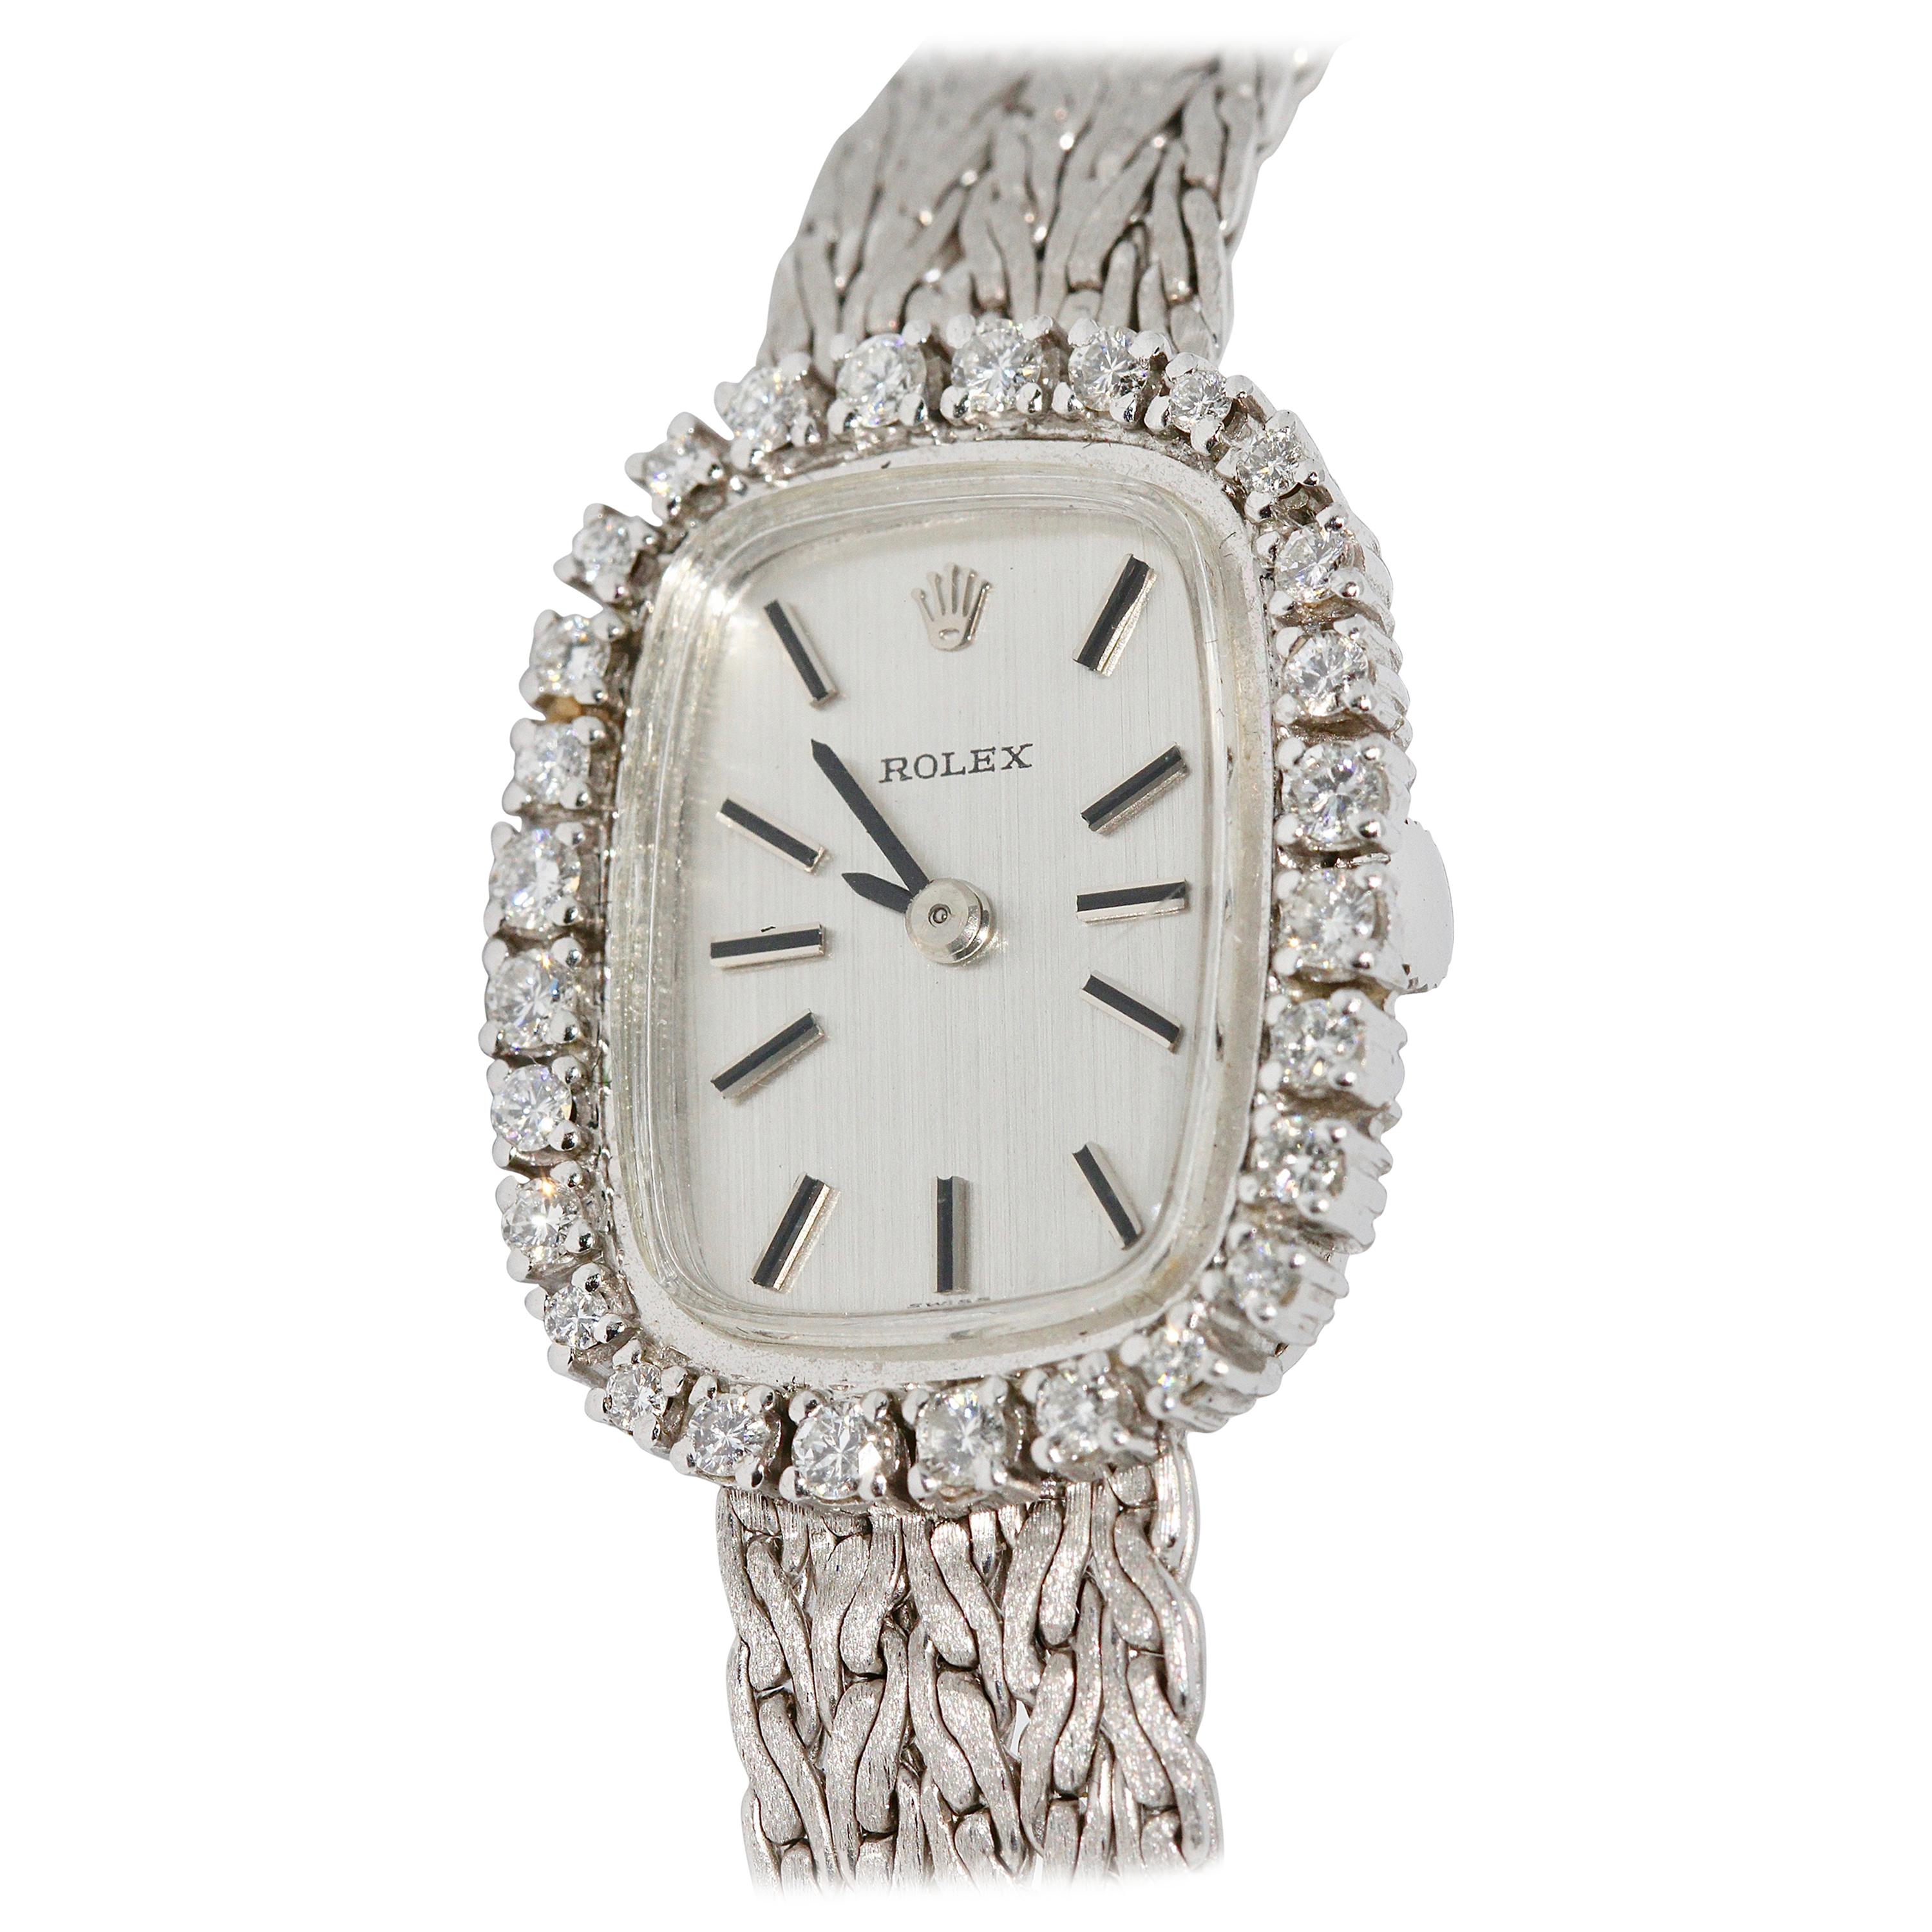 Rolex Ladies Wristwatch 18 Karat white Gold, with Diamonds